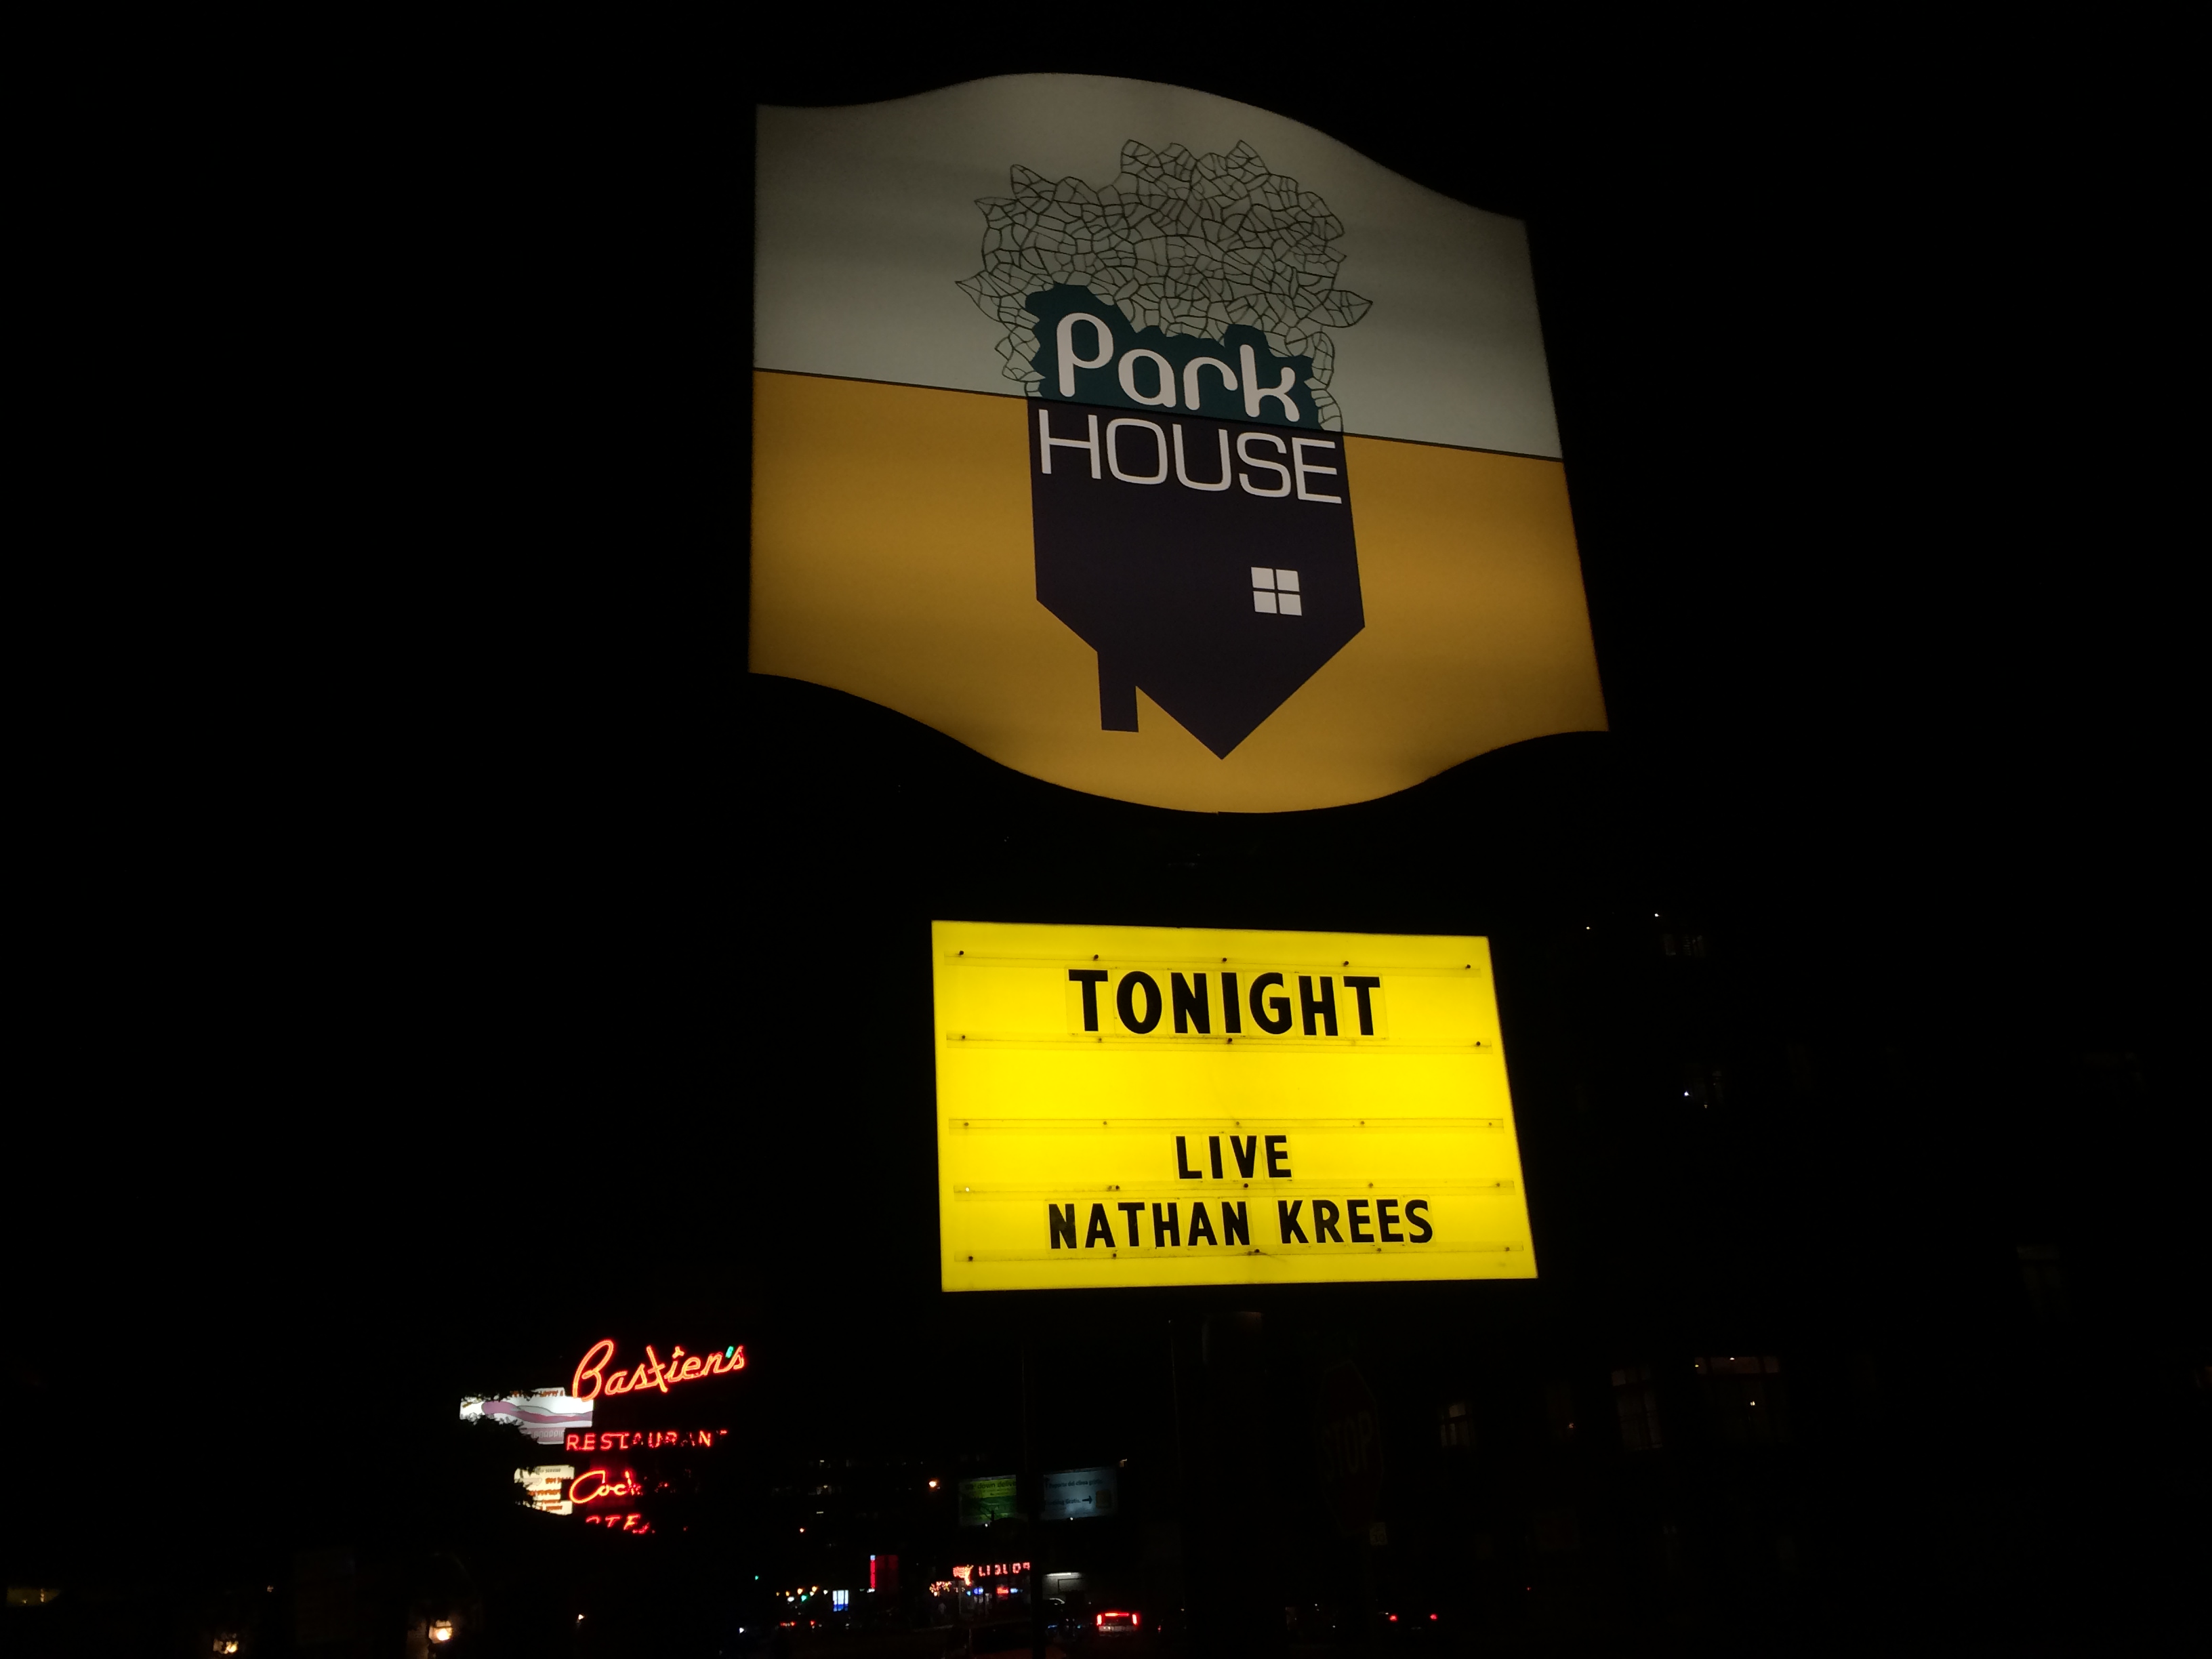 Park House Denver Colorado - Nathan Kress or Nathan Krees